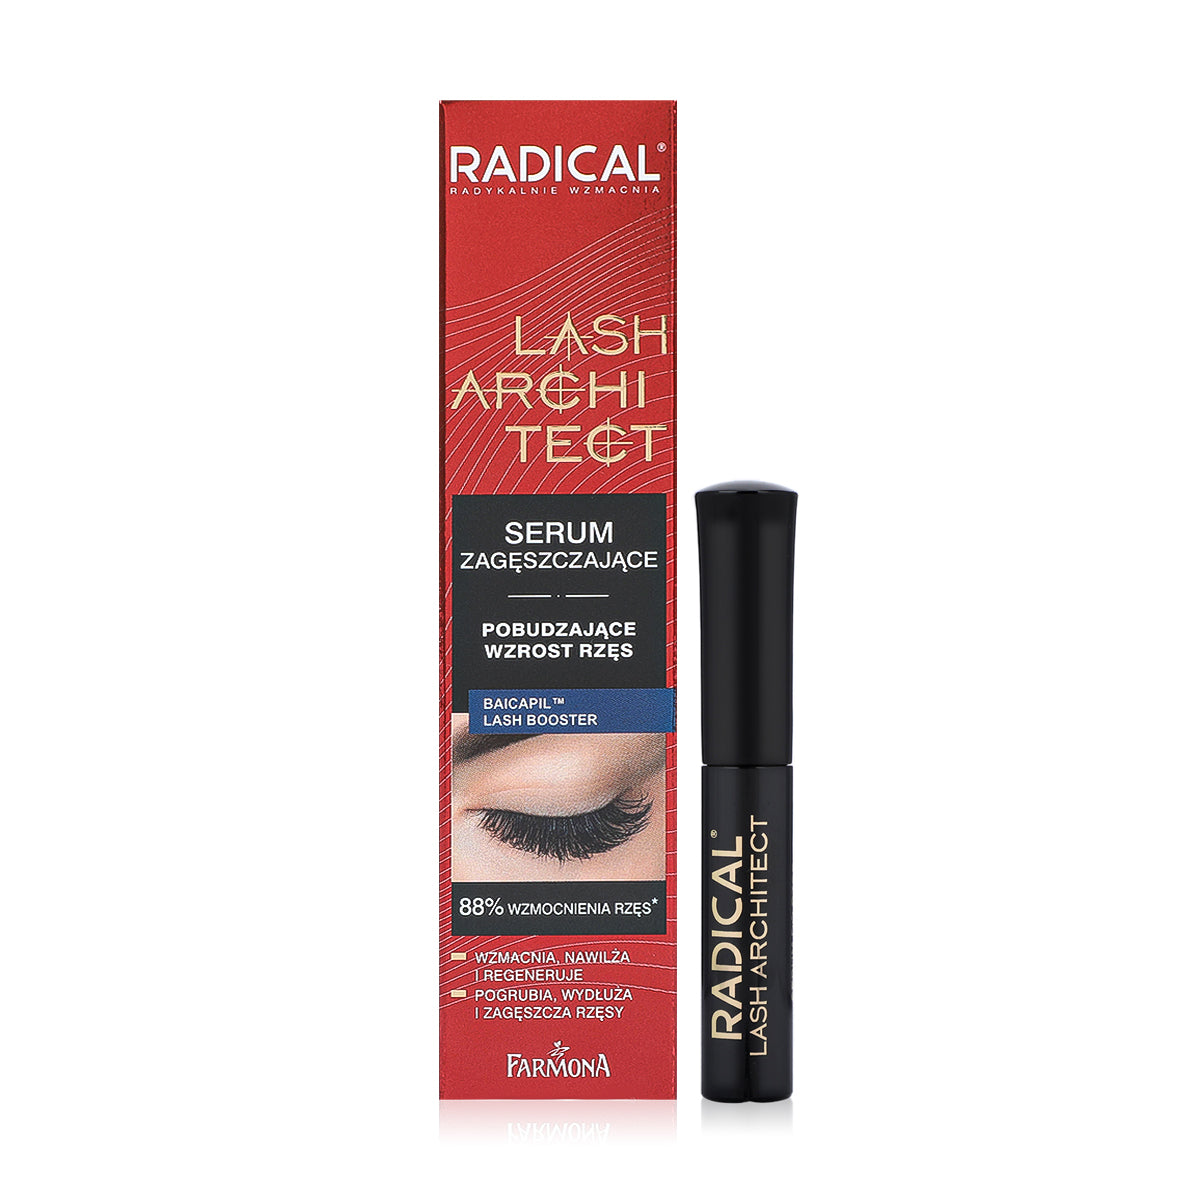 RADICAL LASH ARCHITECH Thickening serum to boost eyelash growth 5ml